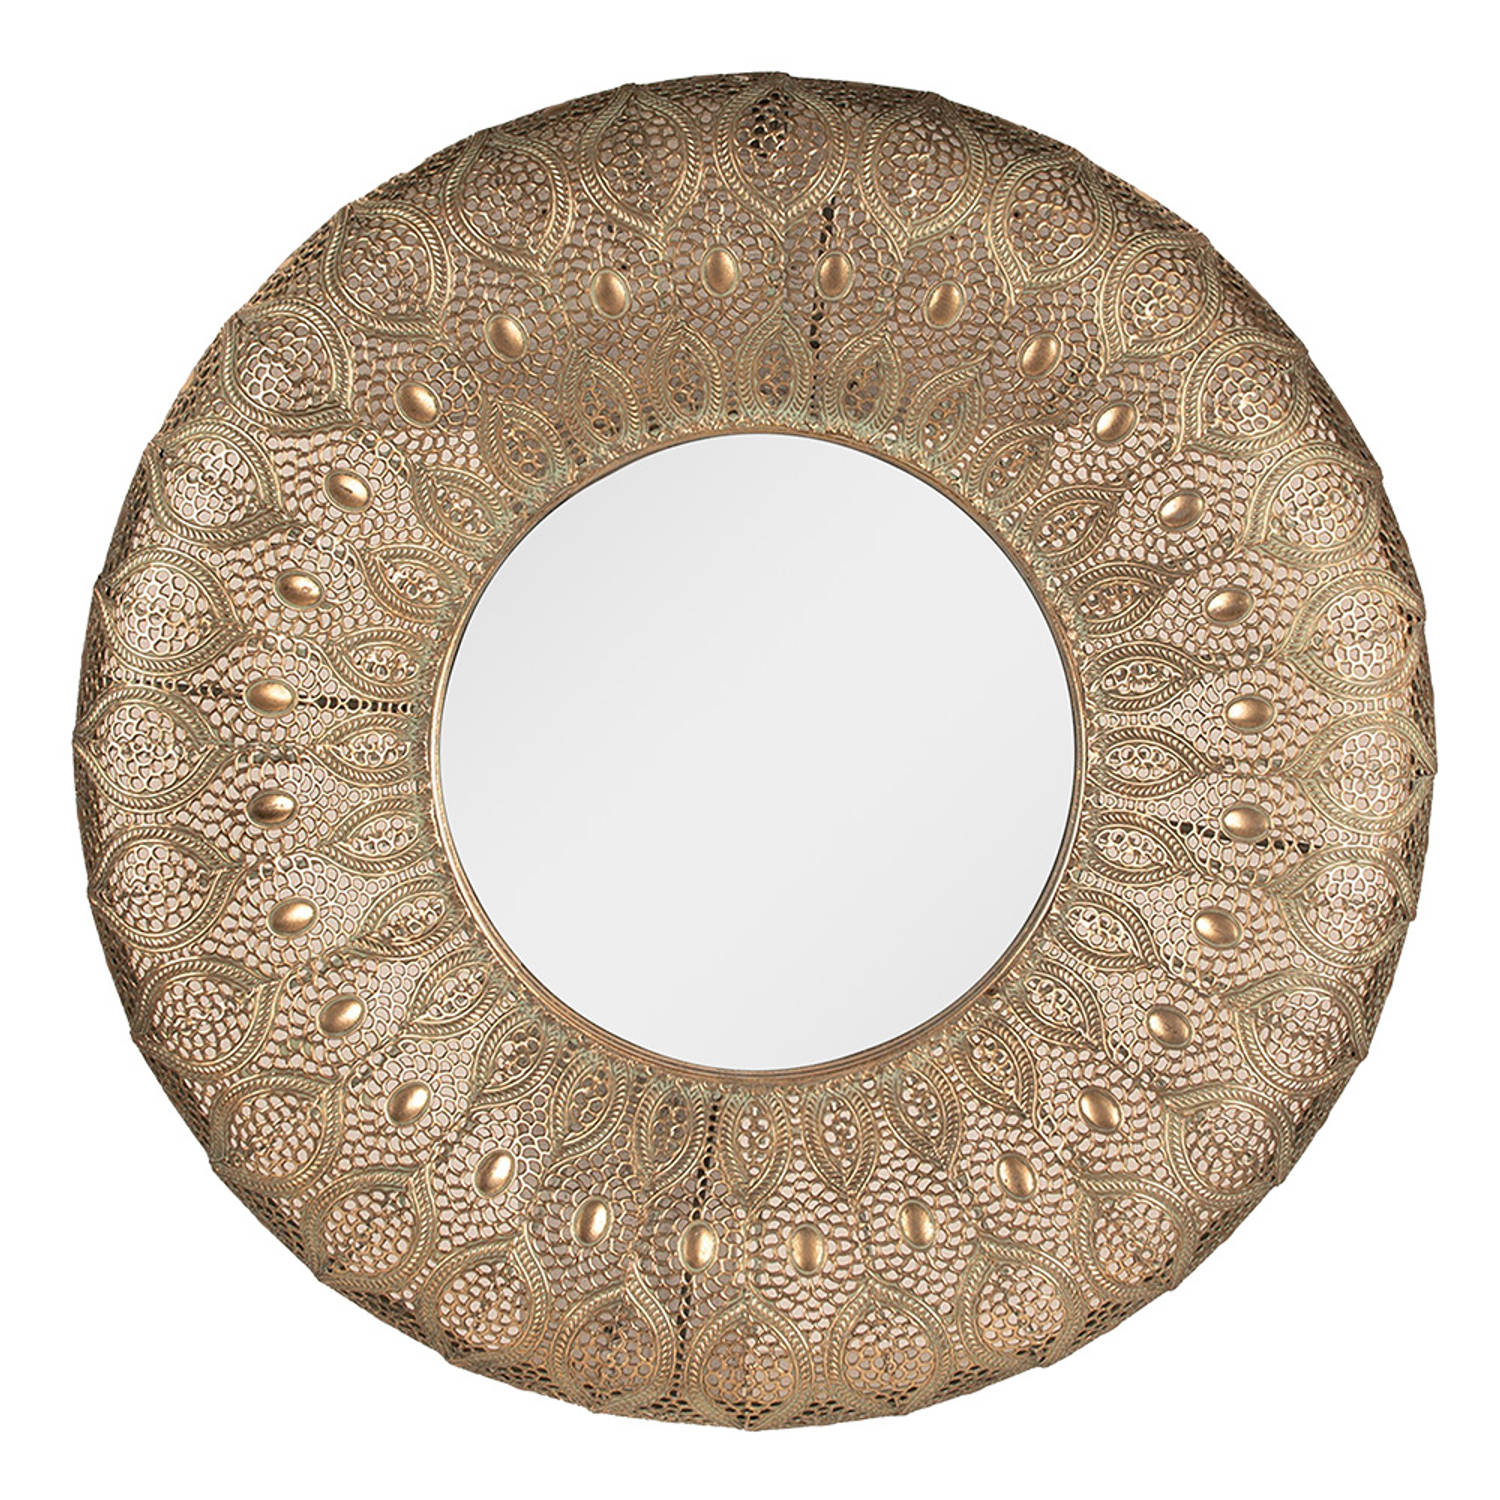 HAES DECO - Ronde Spiegel met mooi bewerkte rand - Kleur Goudkleurig - Formaat Ø 60x6 cm - Materiaal Metaal / Glas - Wandspiegel, Spiegel rond